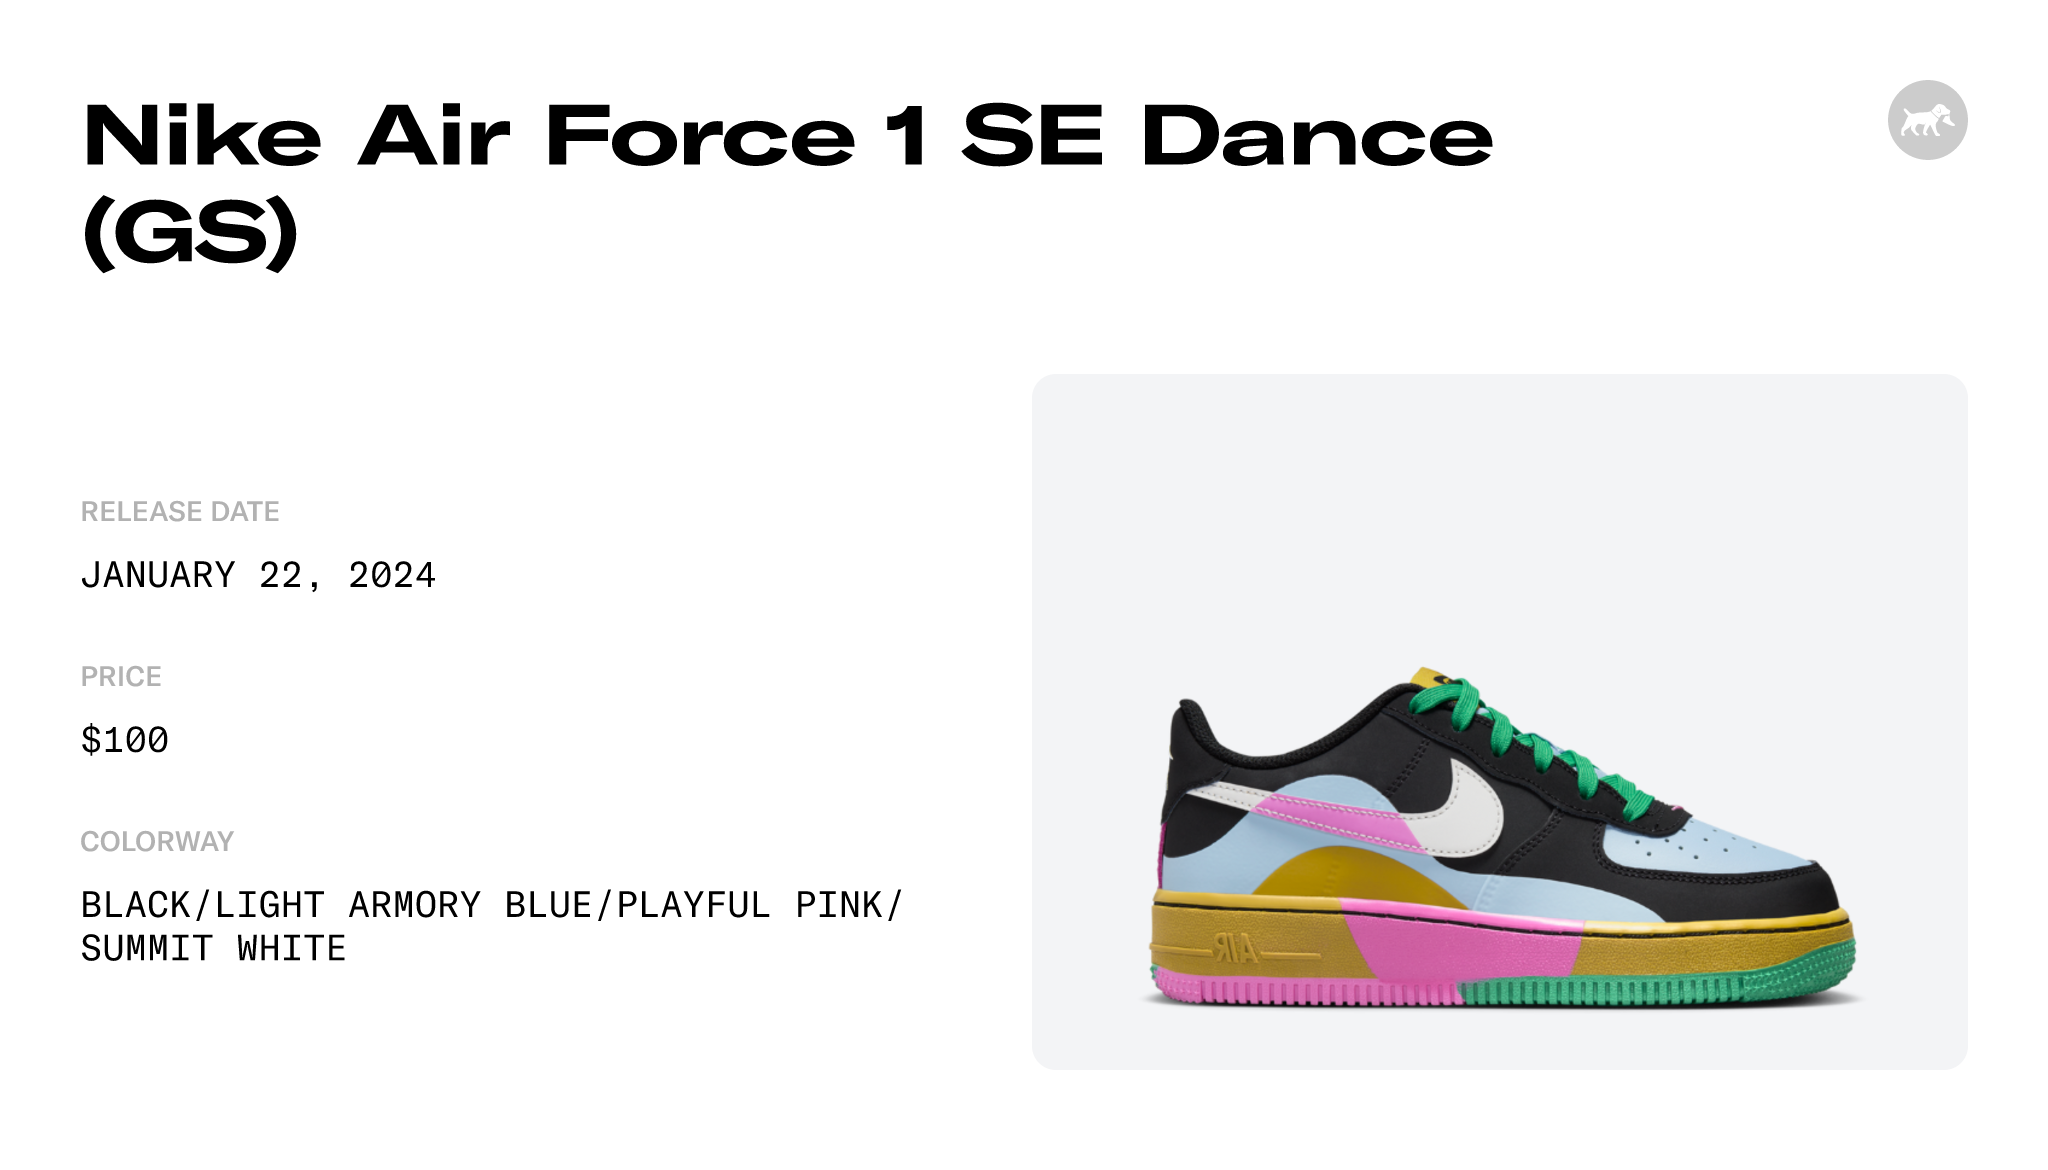 Lower Price Dance. Nike IN